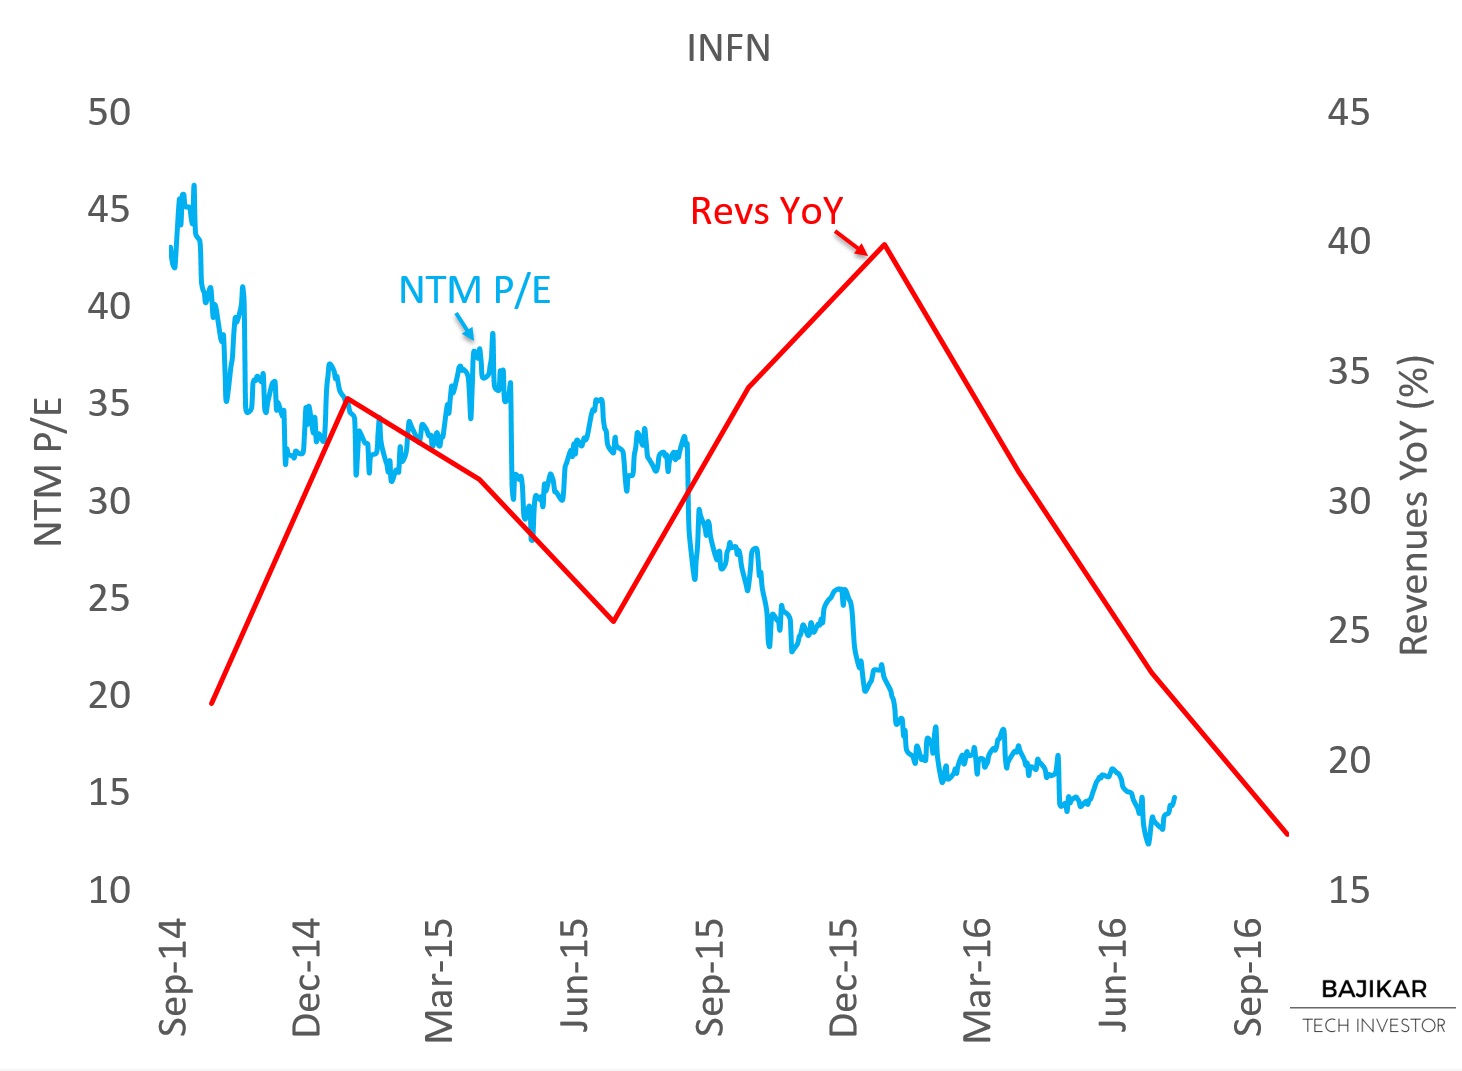 INFN NTM P/E vs. YoY Revenues 